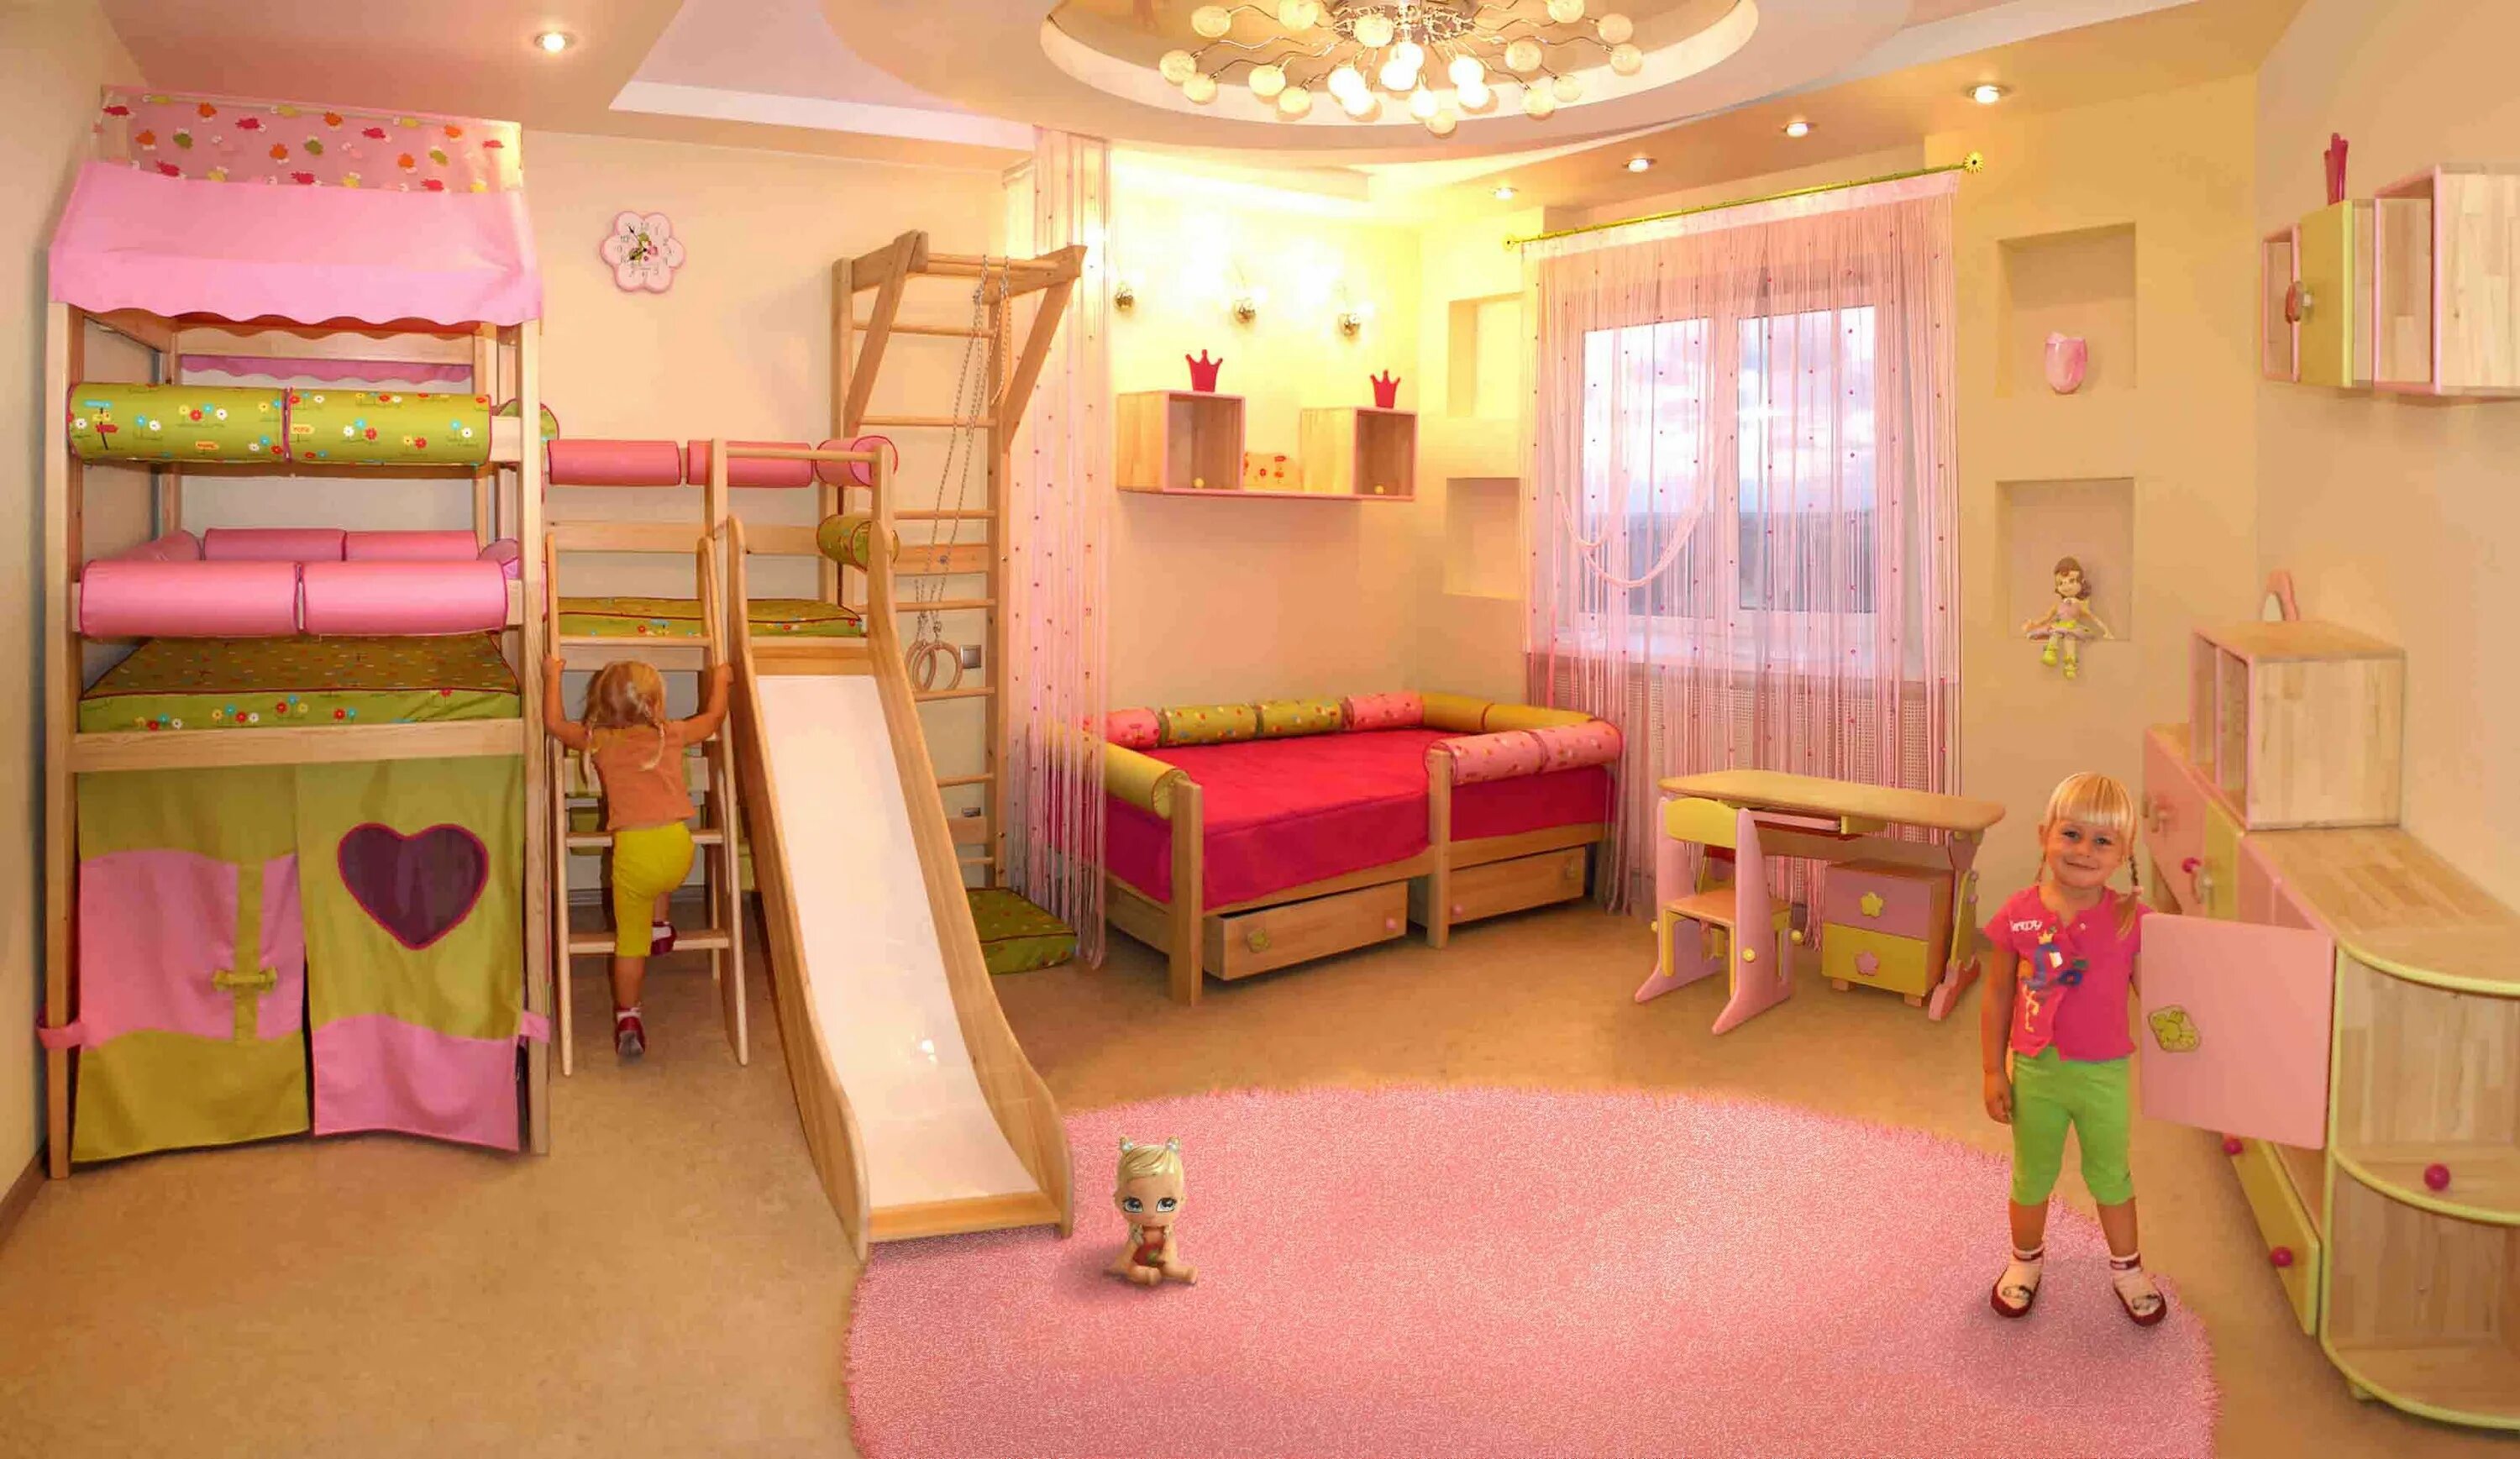 Комната для девочки 3 года. Детская комната для девочки 6 лет. Комната для девочки 2 года. Детская комната для девочки 3 года.